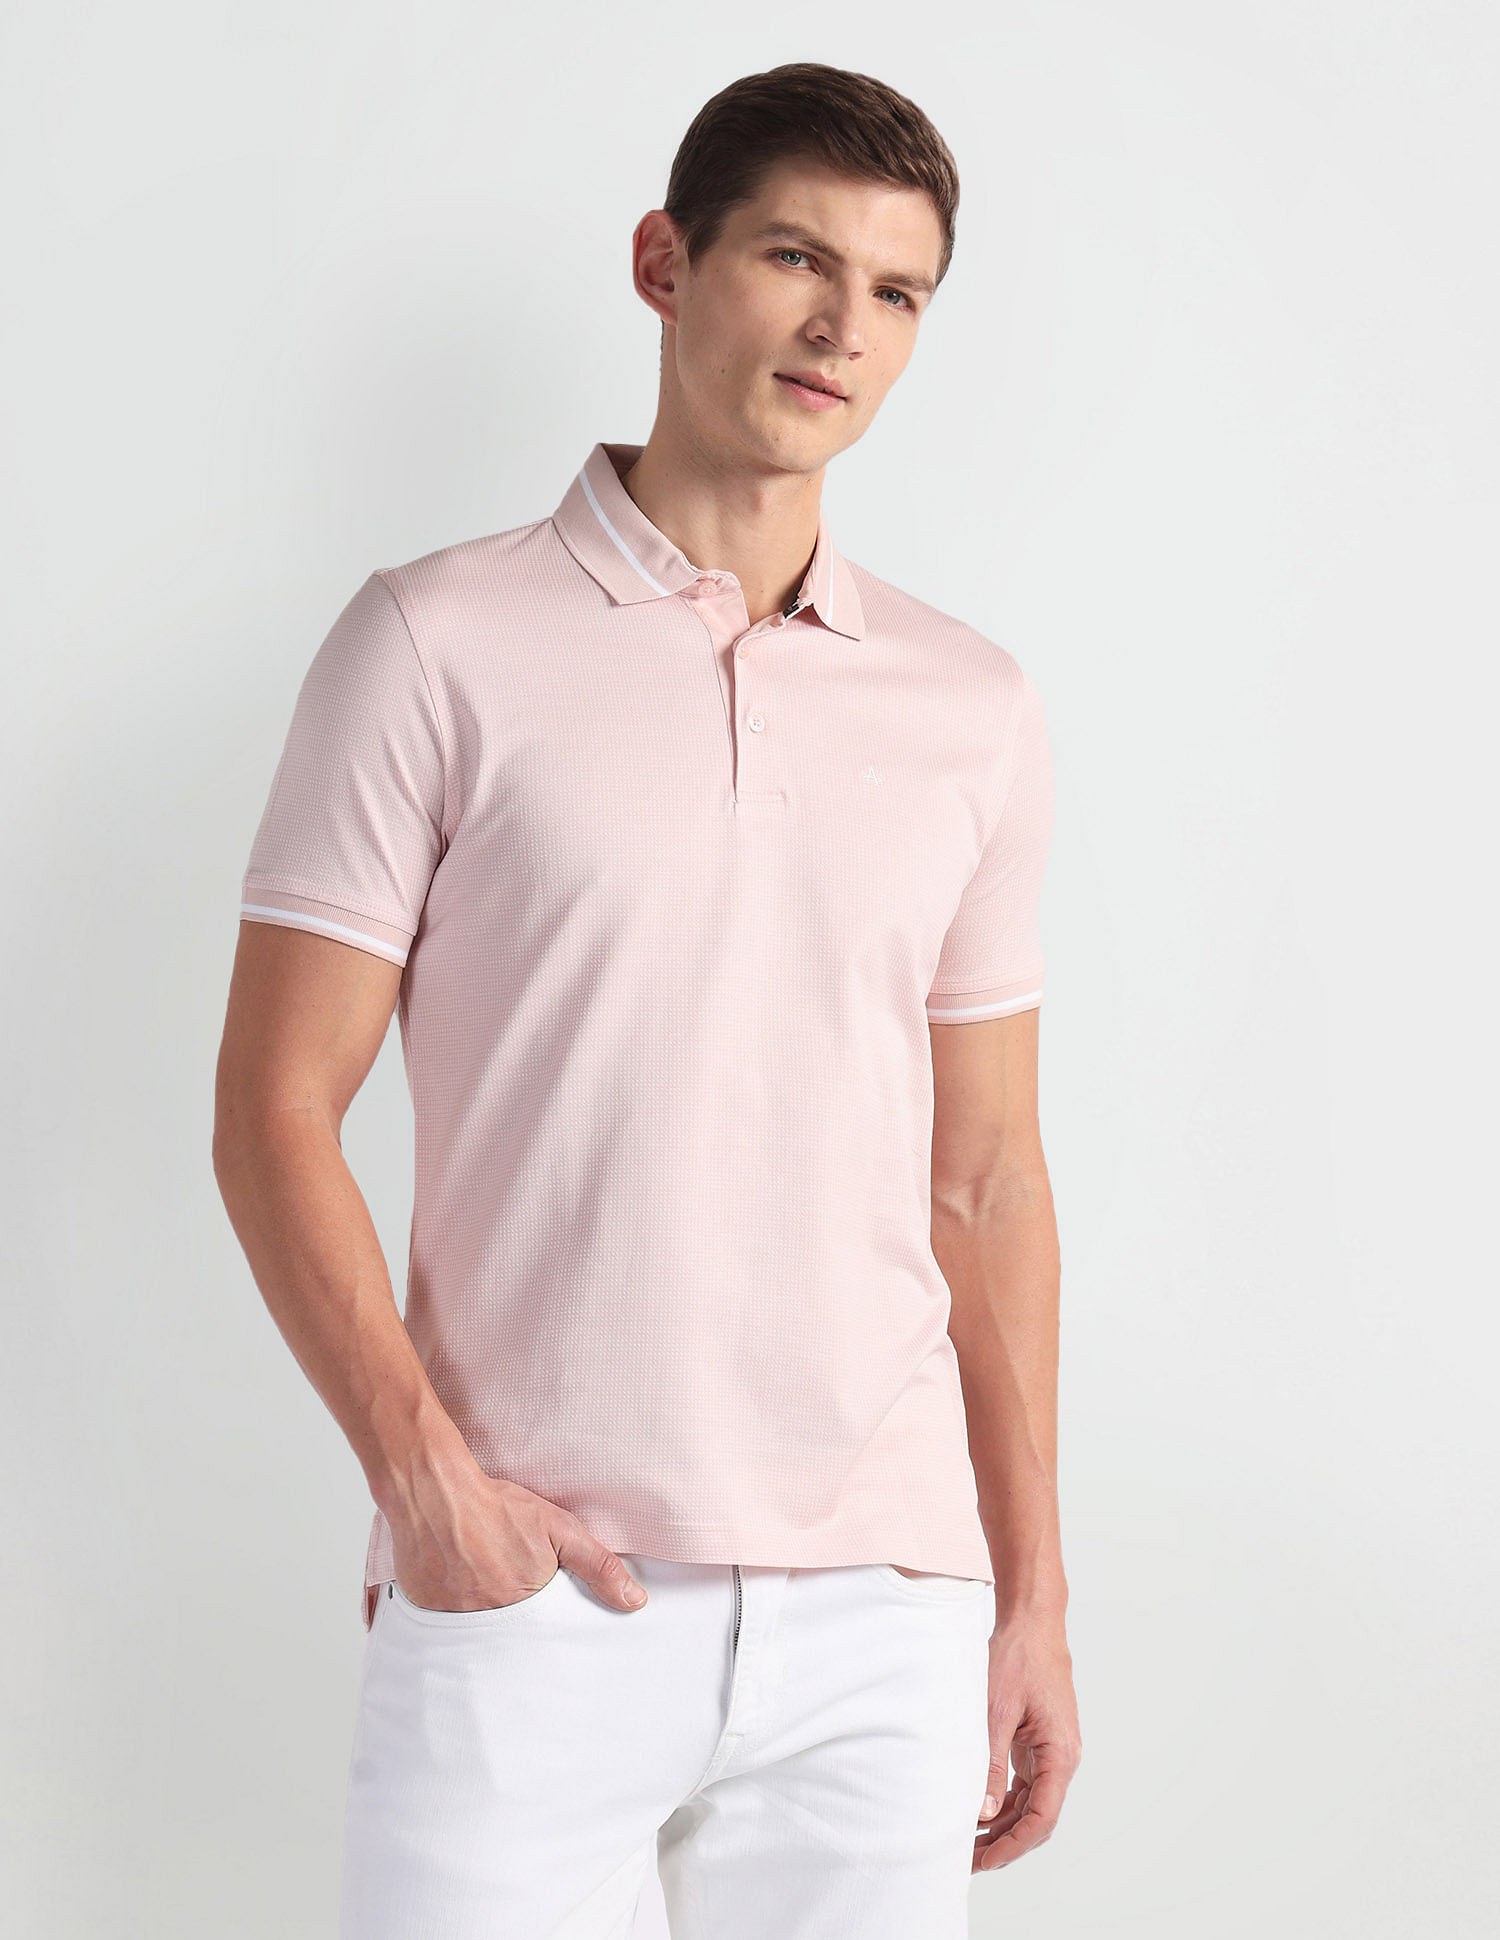 Buy ARROW SPORT Pink Patterned Mercerised Cotton Men's Polo Tees